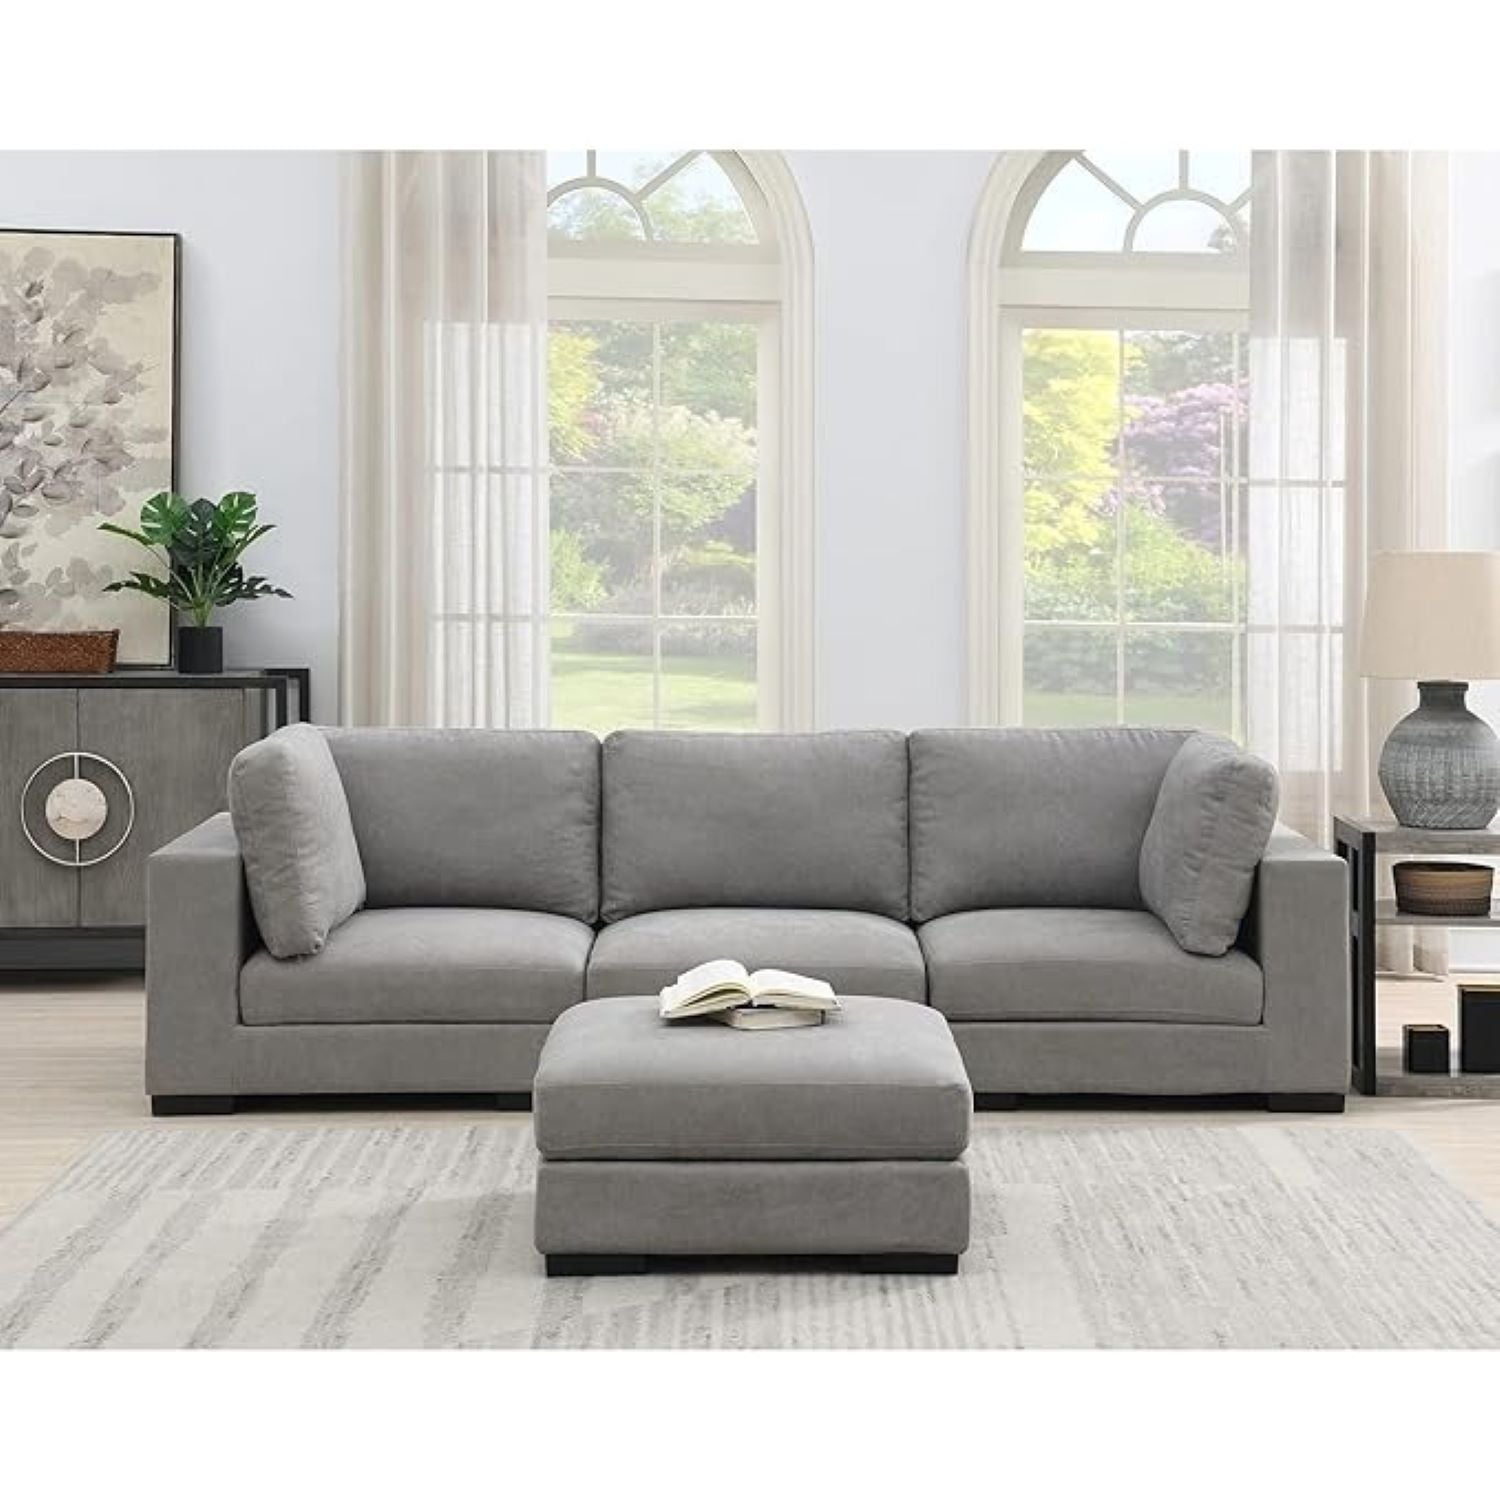 Arina Fabric Sofa With Ottoman for Living Room - Grey - Torque India